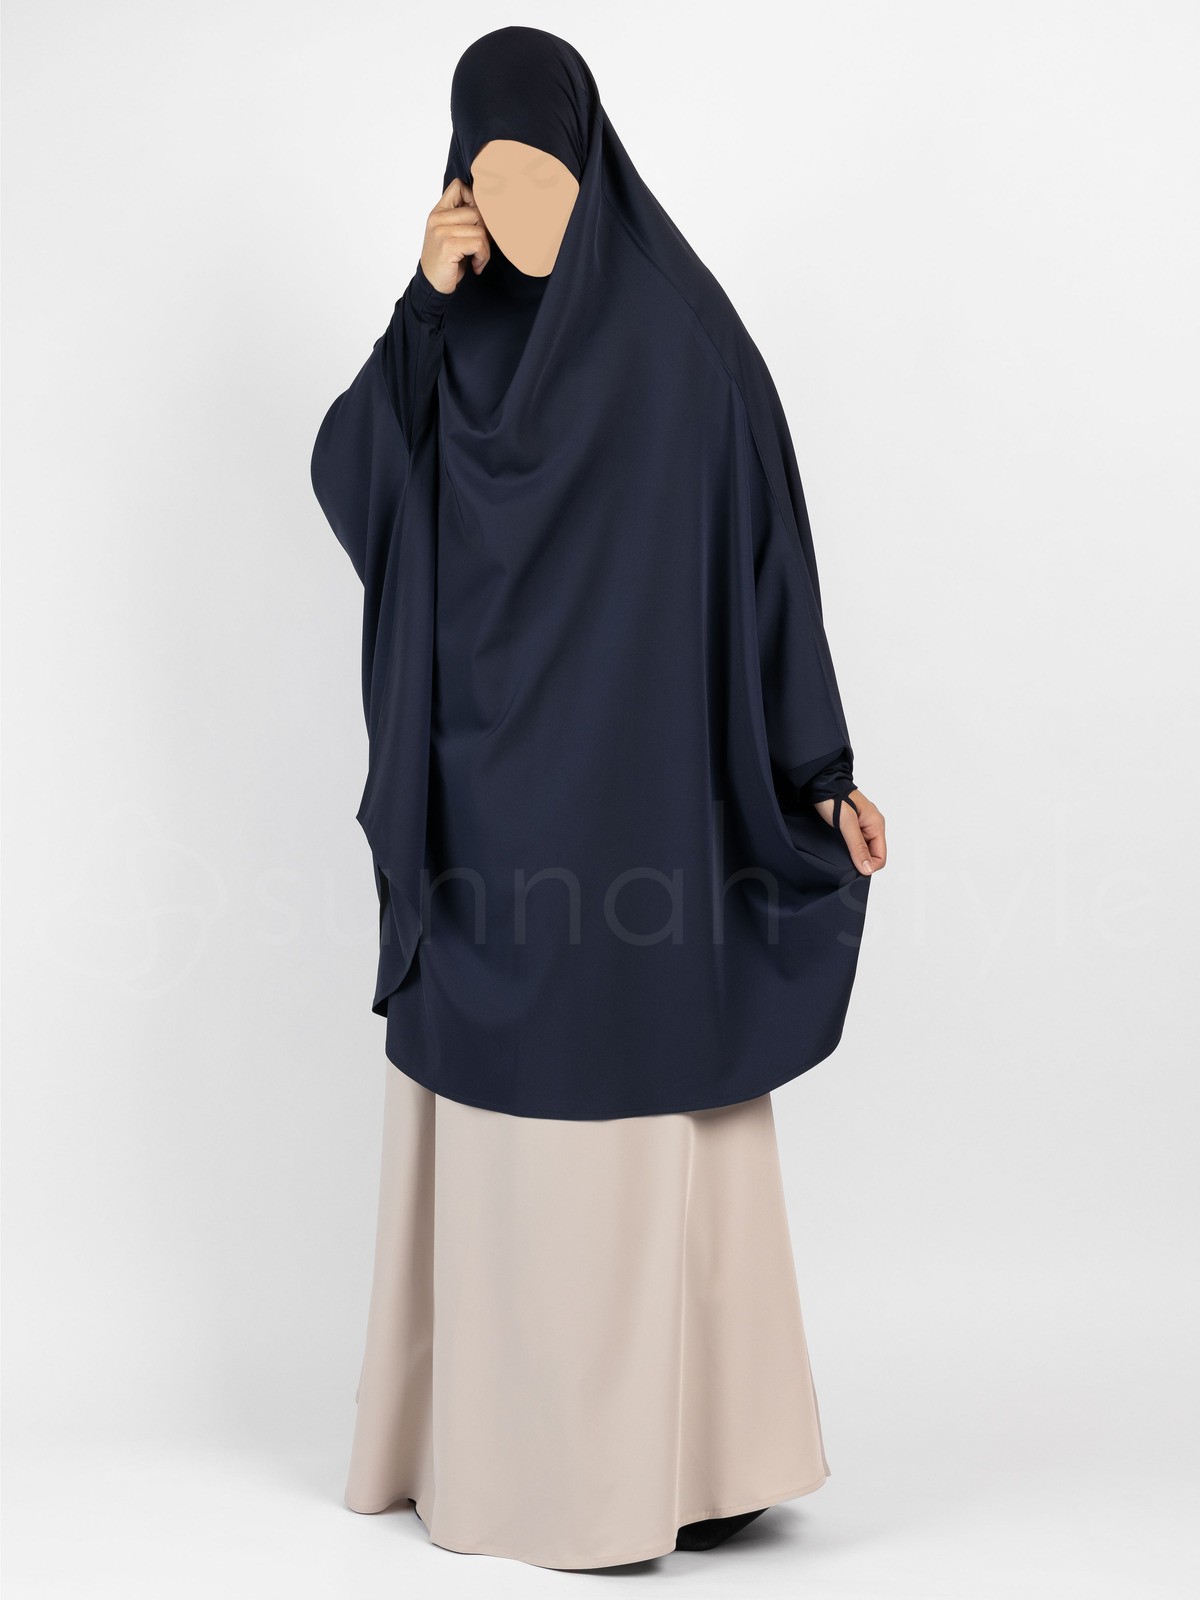 Sunnah Style - Signature Jilbab Top - Knee Length (Navy Blue)